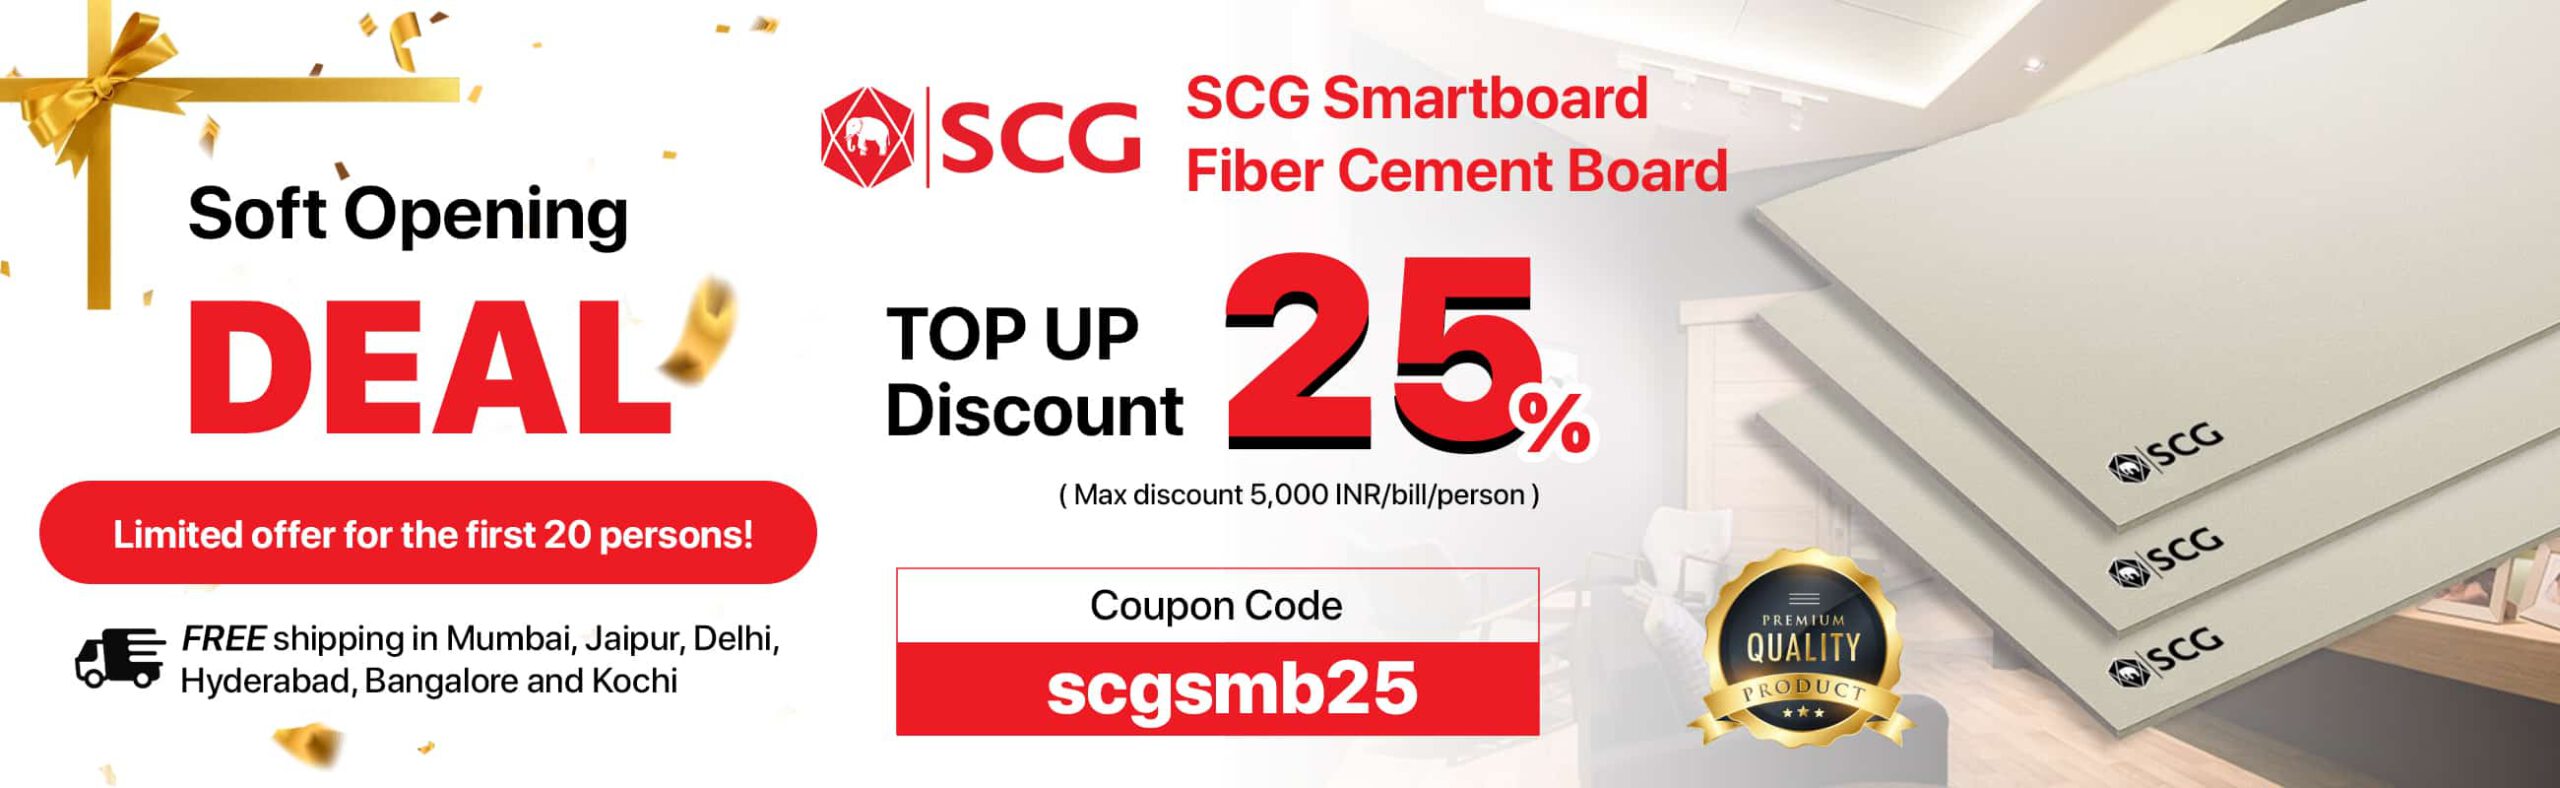 SCG Fiber Cement Board in India Desktop